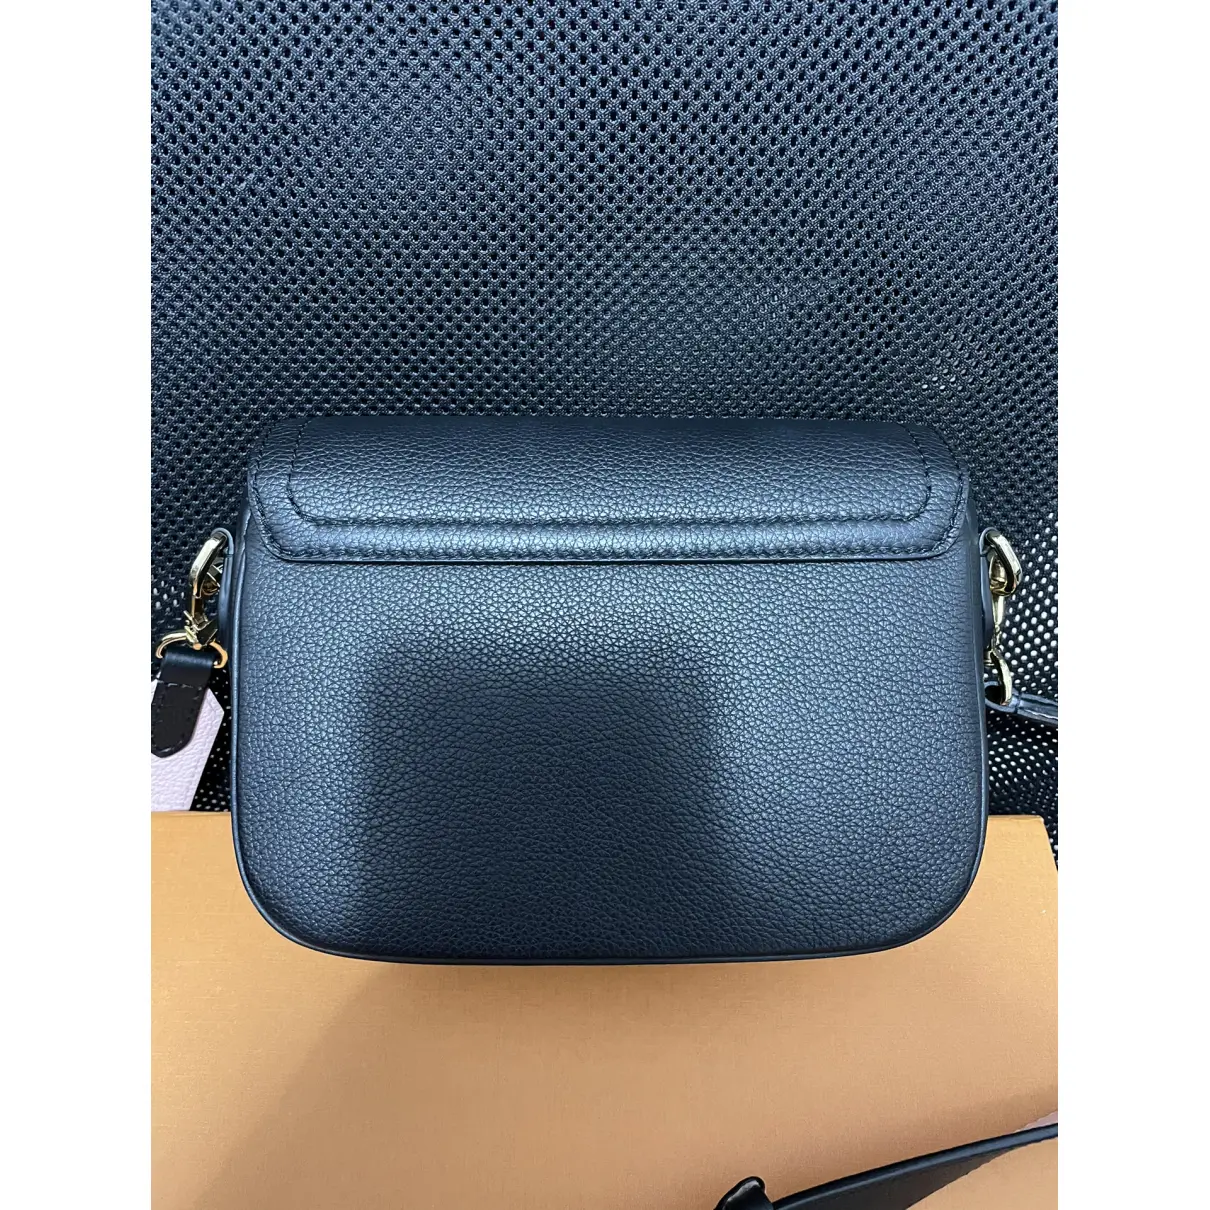 Buy Louis Vuitton Lockme Tender leather handbag online